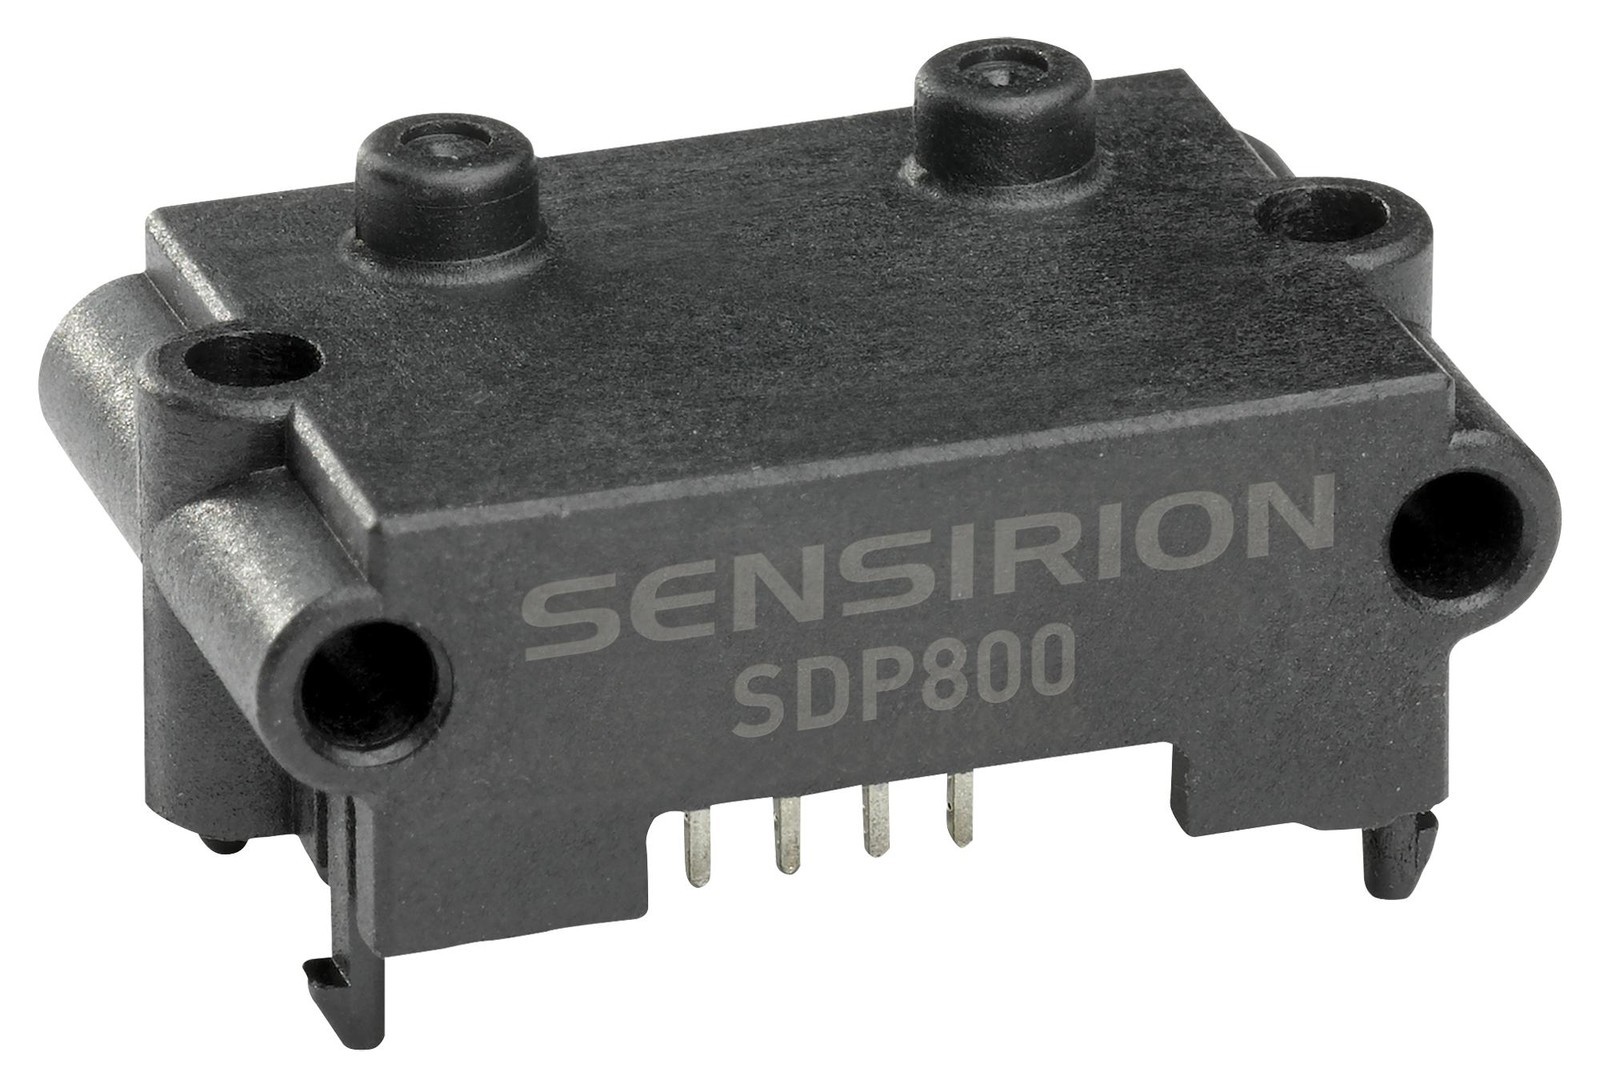 Sensirion Sdp801-500Pa Press Sensor, Differential, 500Pa, I2C